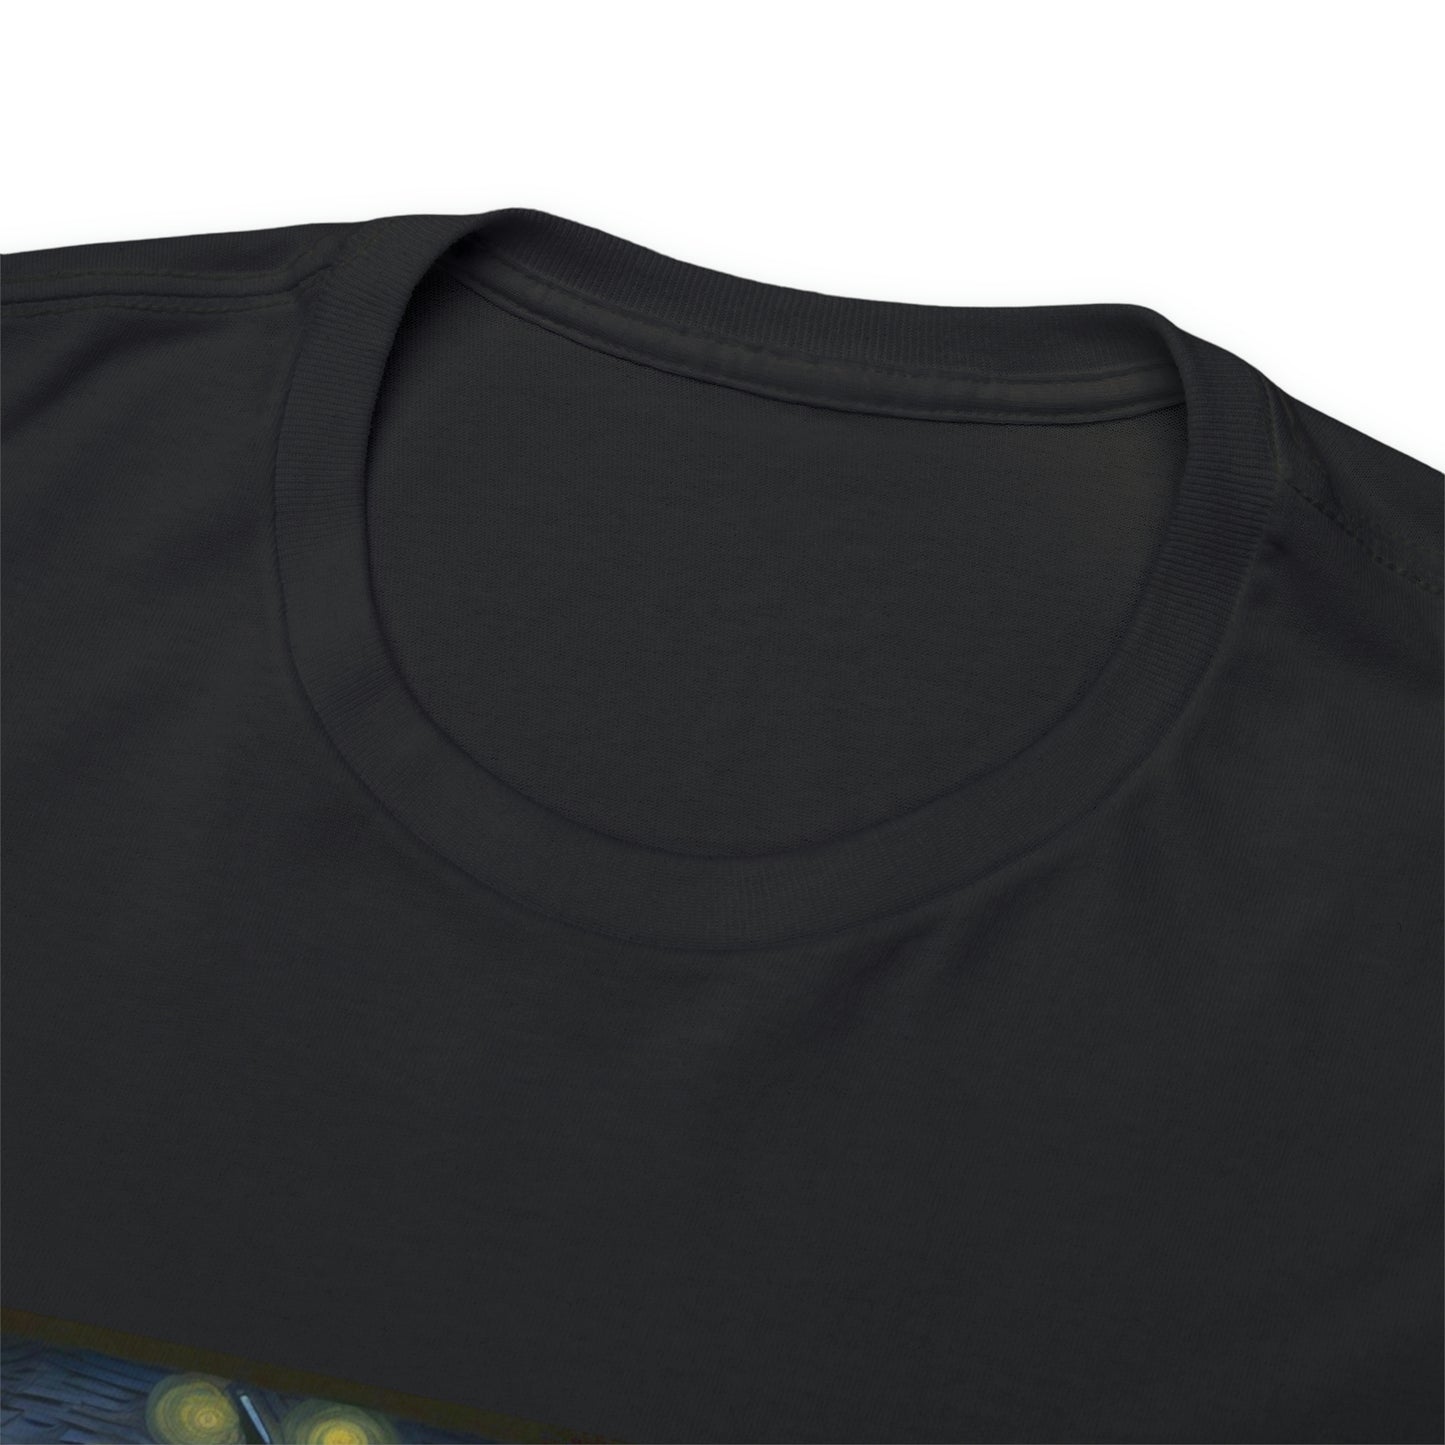 Starry Night version of Batman - Unisex T-Shirt